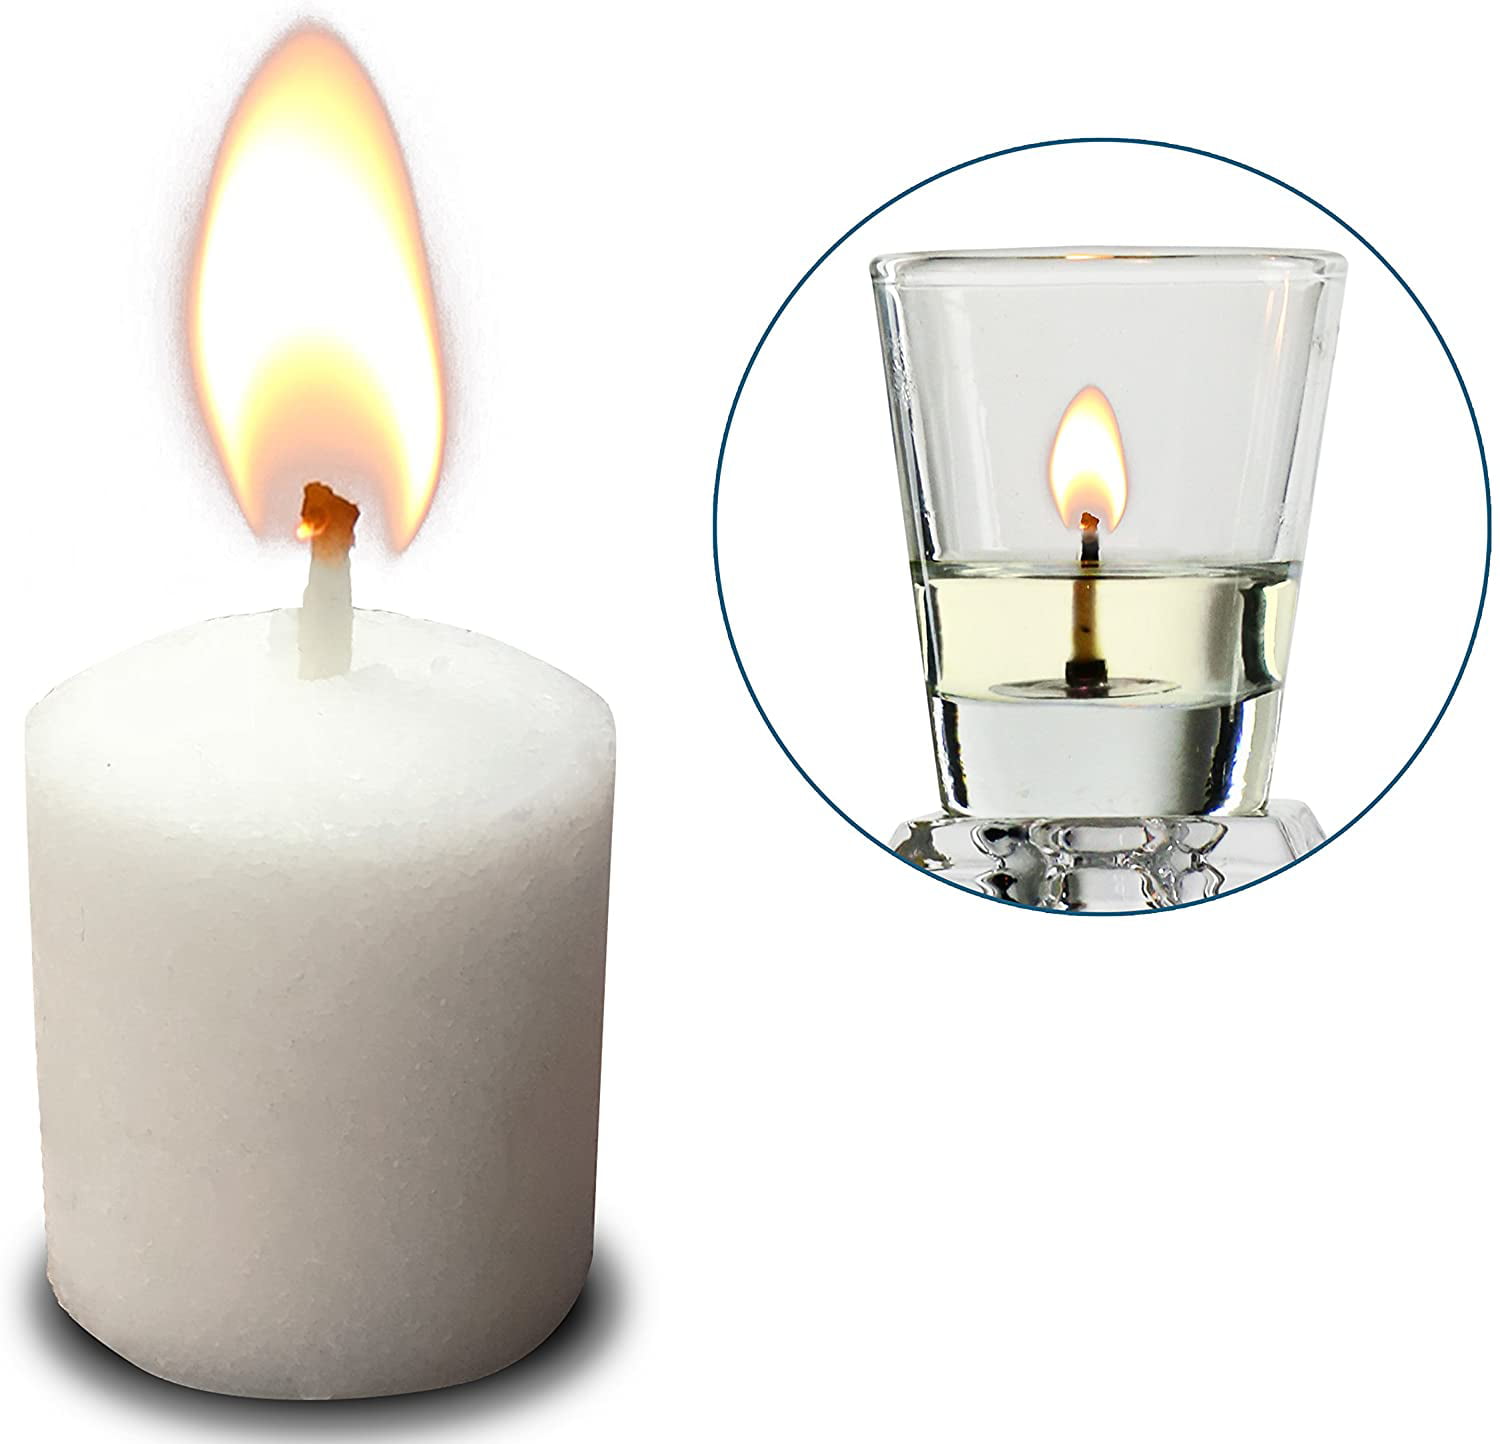 6 Hour Burn Time Ner Mitzvah 72 Pack Quality Neronim Votive Candles